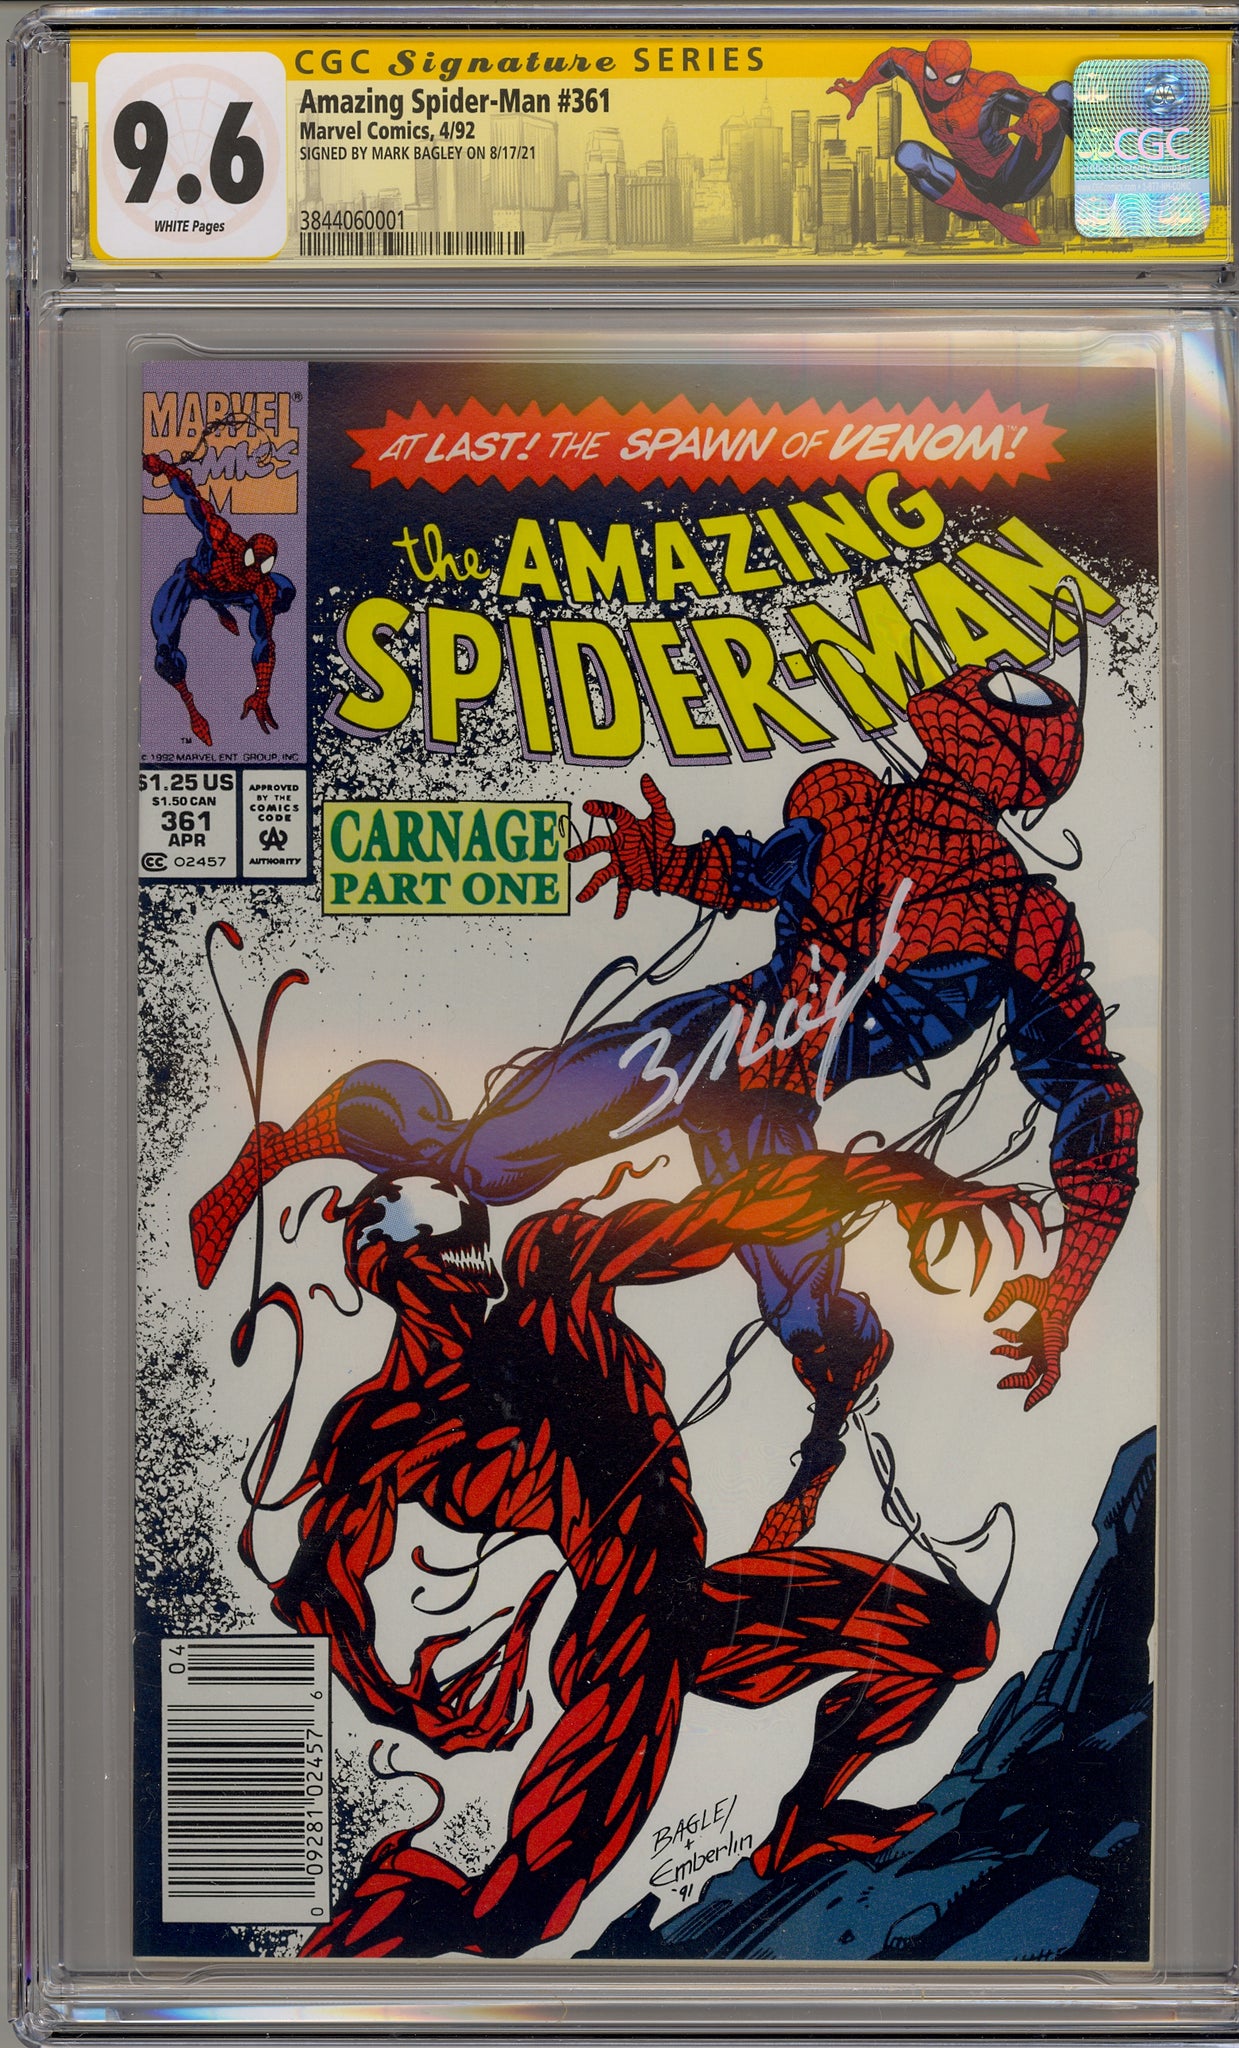 Amazing Spider-Man #361 (1992) - CGC Signature Series - newsstand edition - Carnage